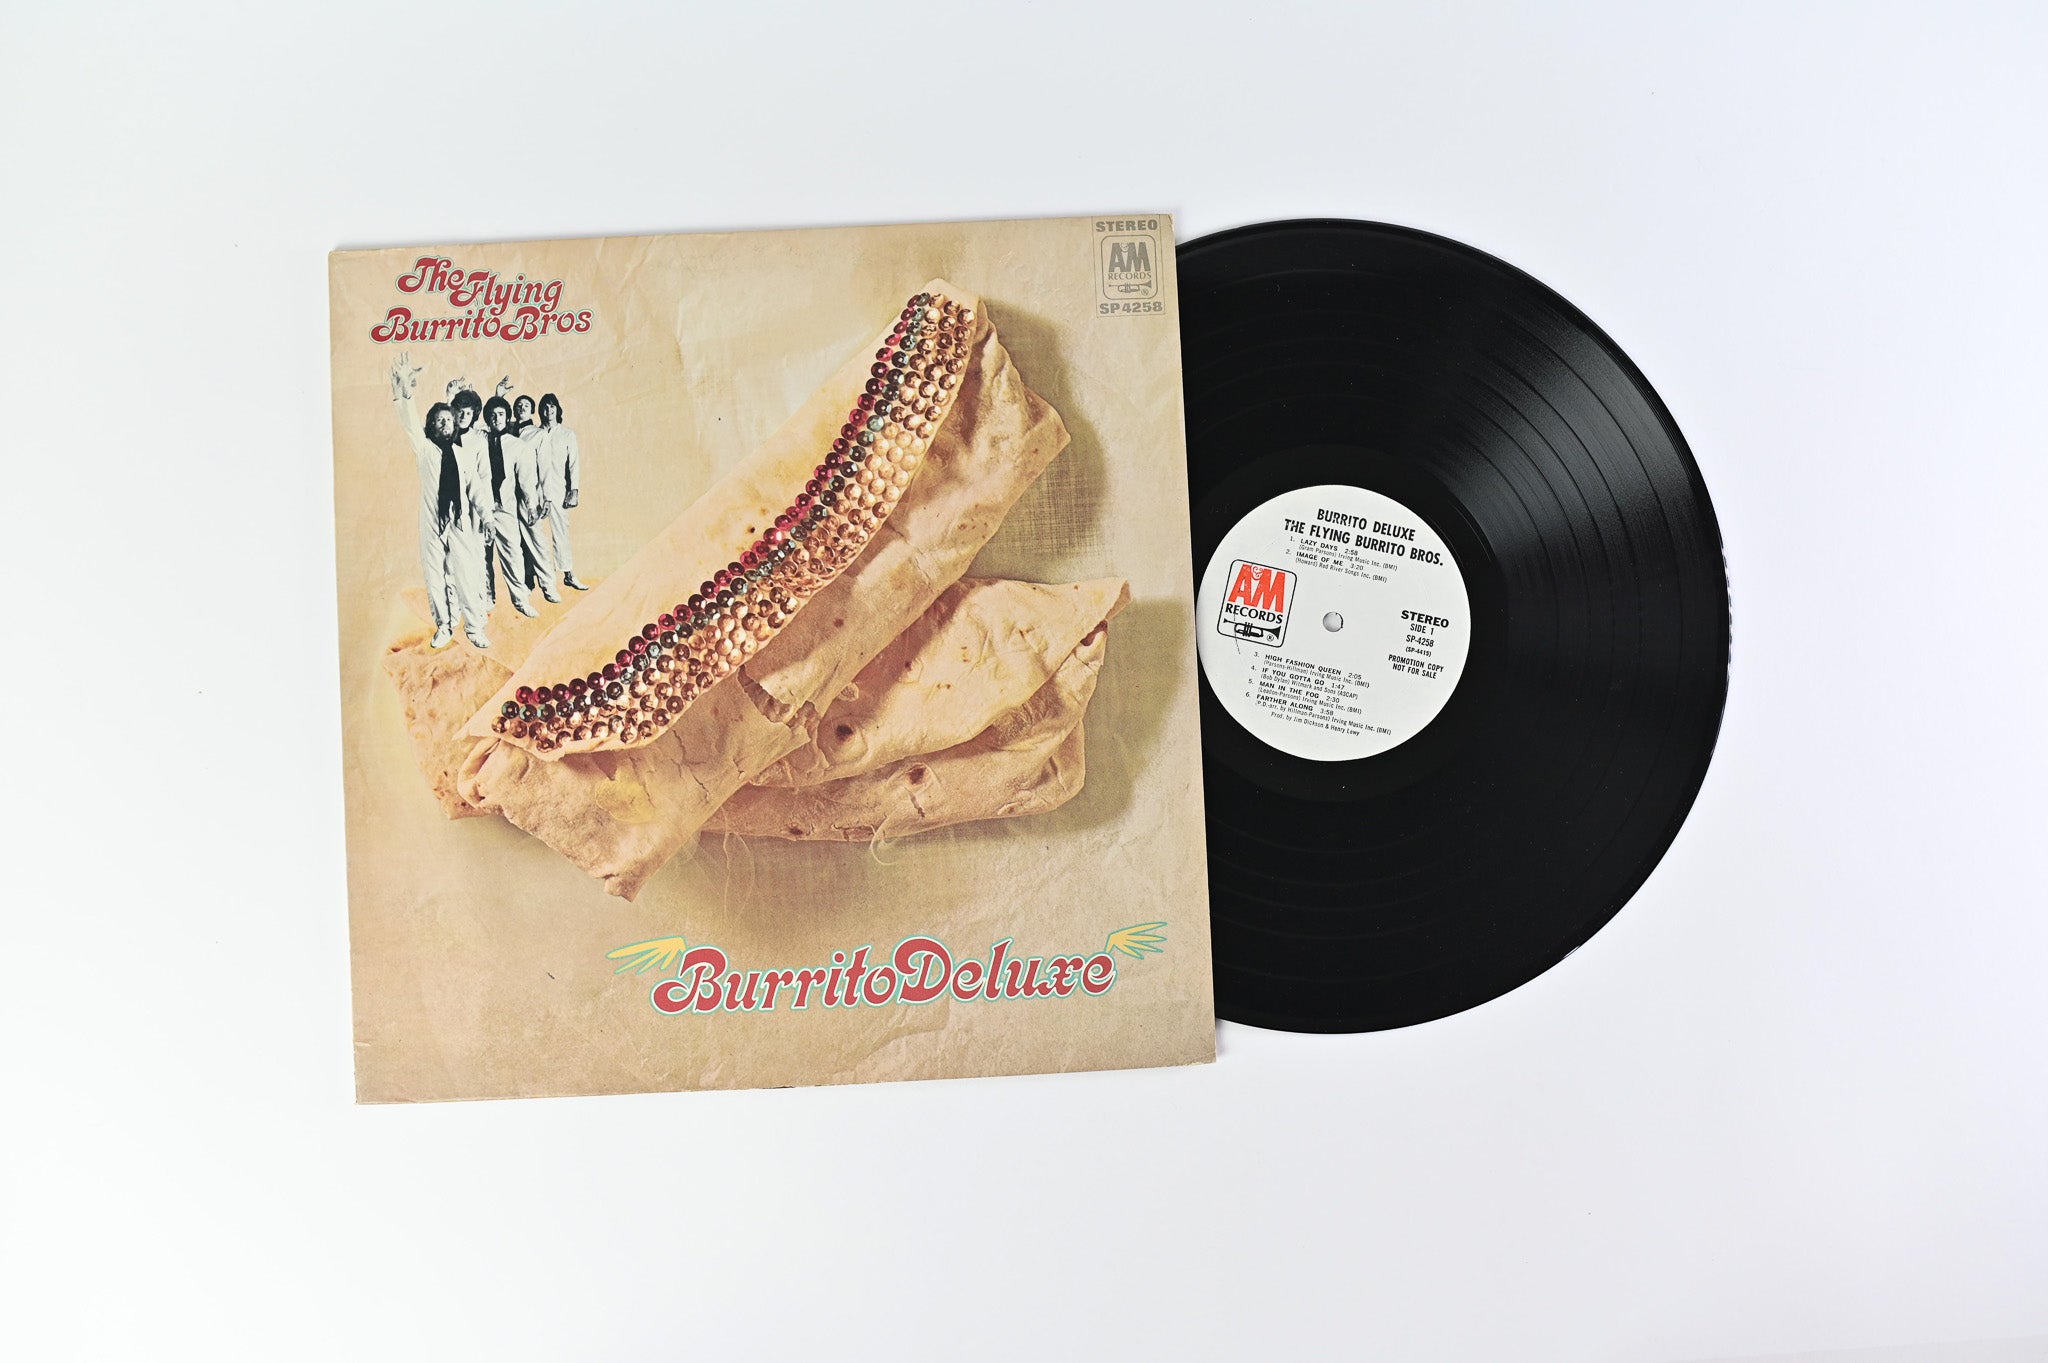 The Flying Burrito Bros - Burrito Deluxe on A&M Records Promo